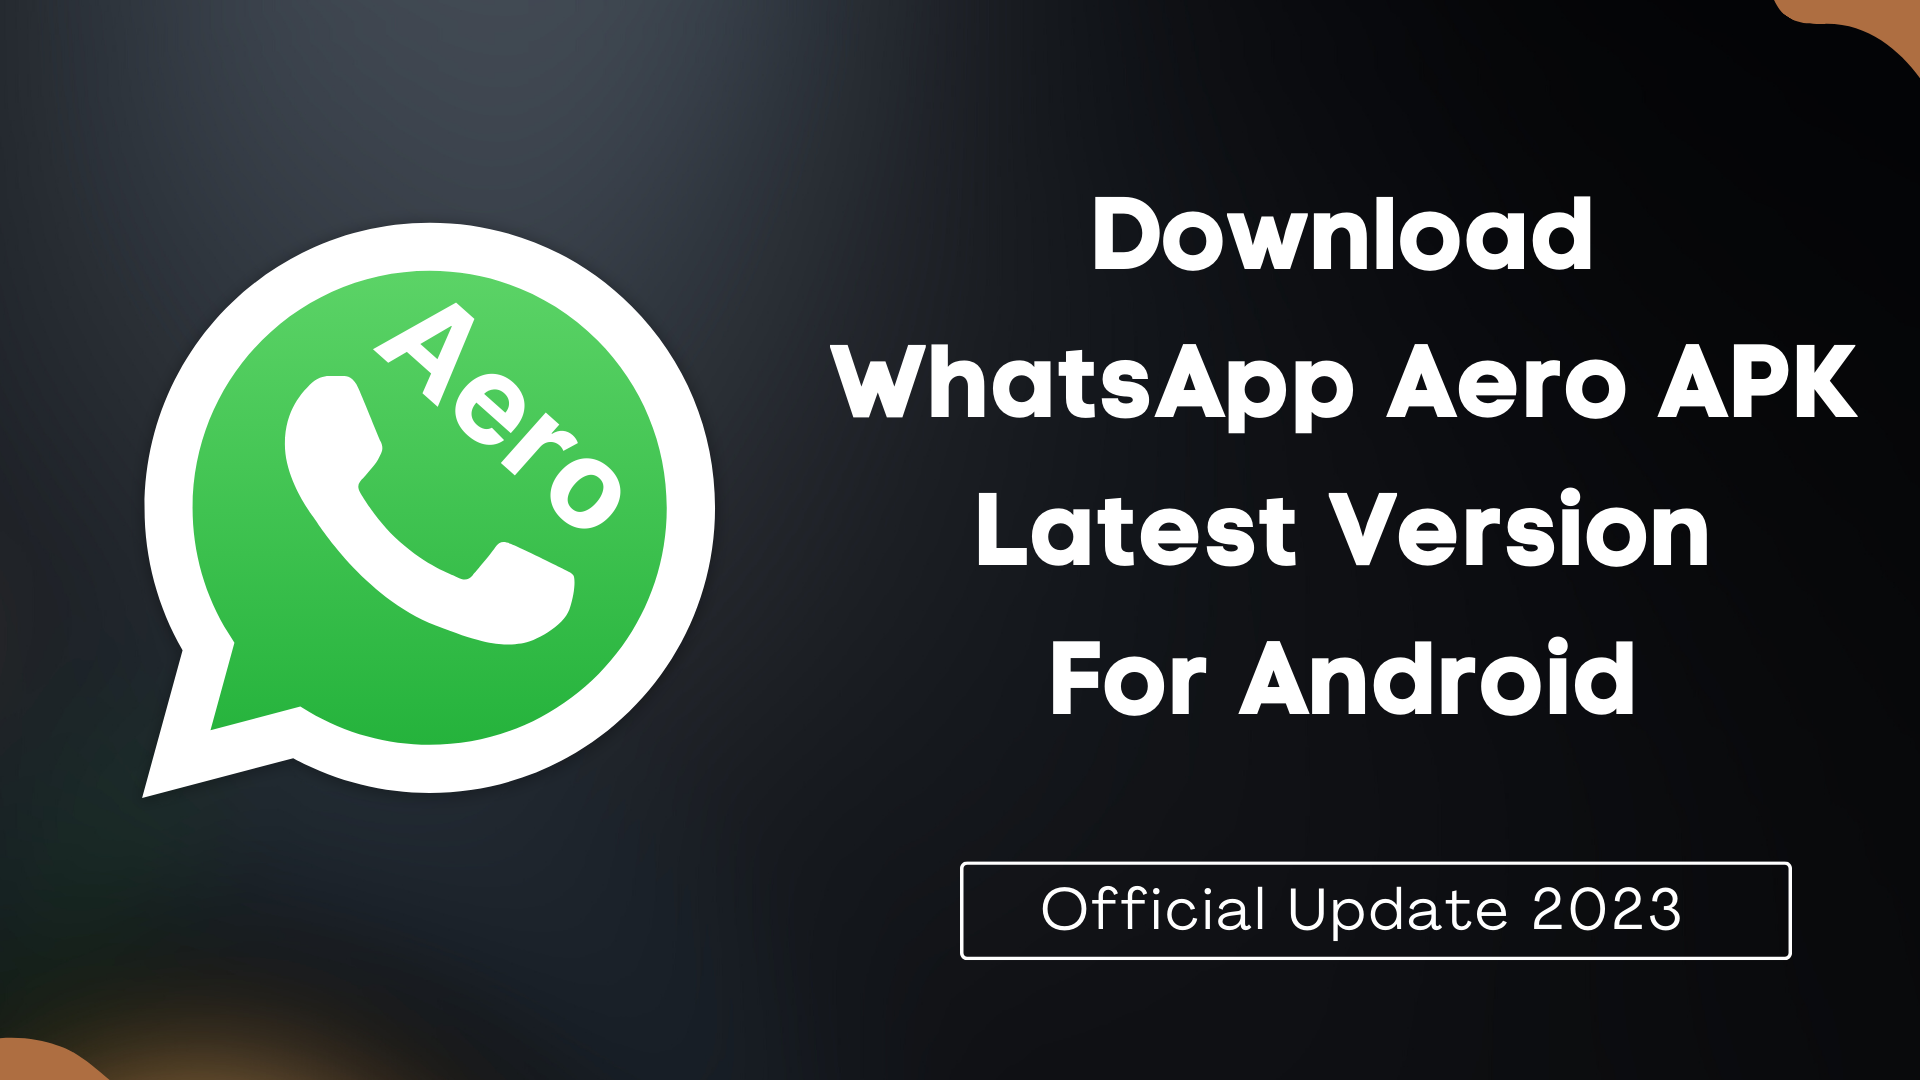 WhatsApp Aero APK Featured Image